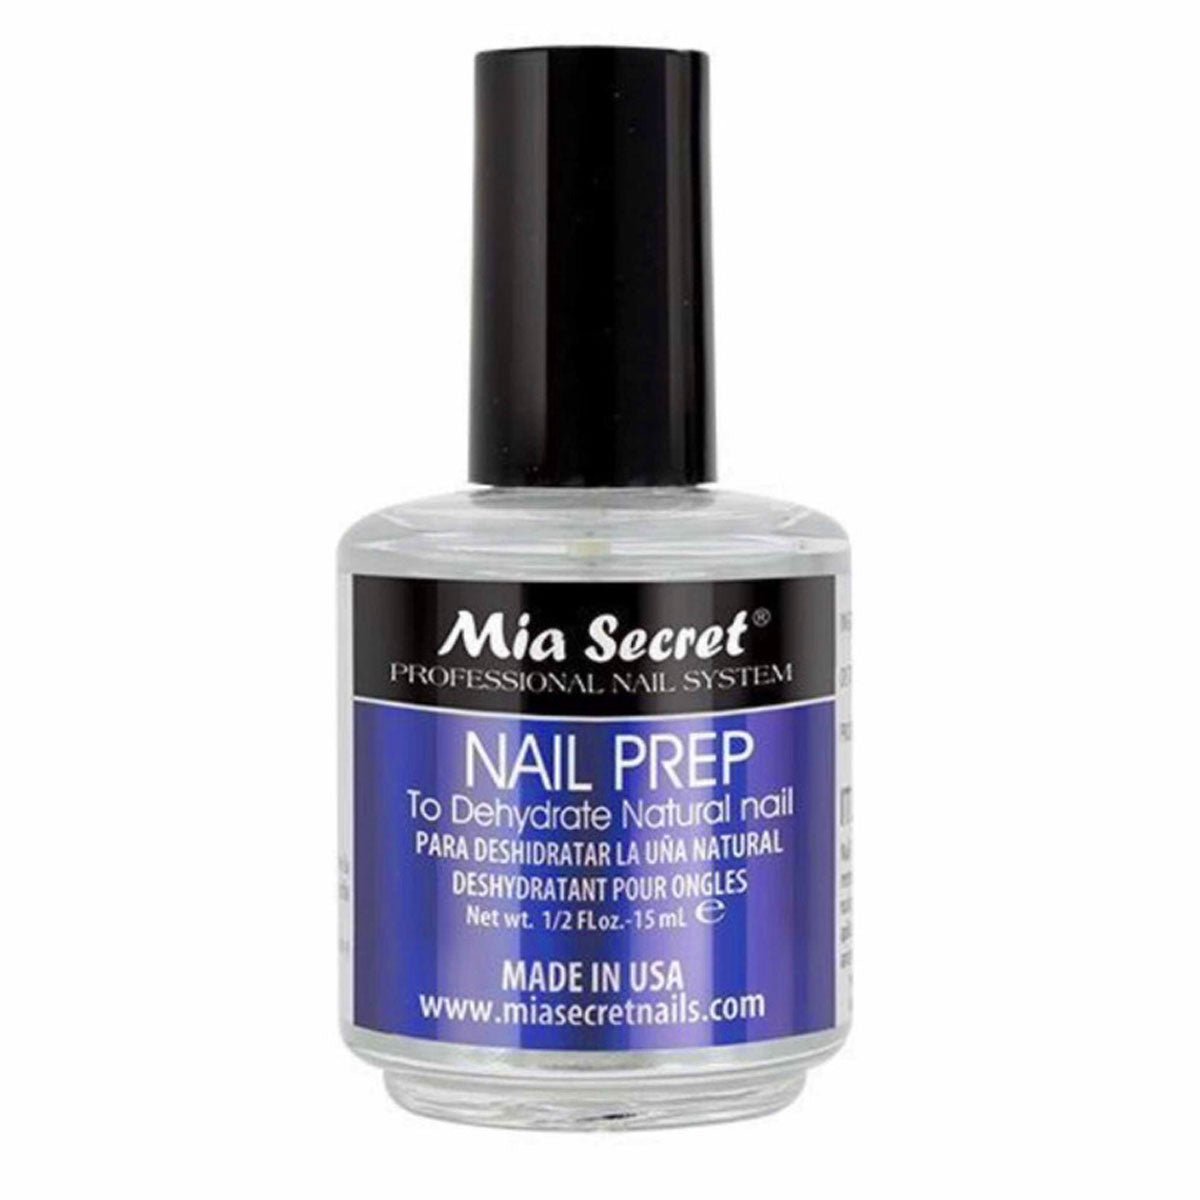 Mia Secret Deshidratador Nail Prep 15ml en Beauty Supply